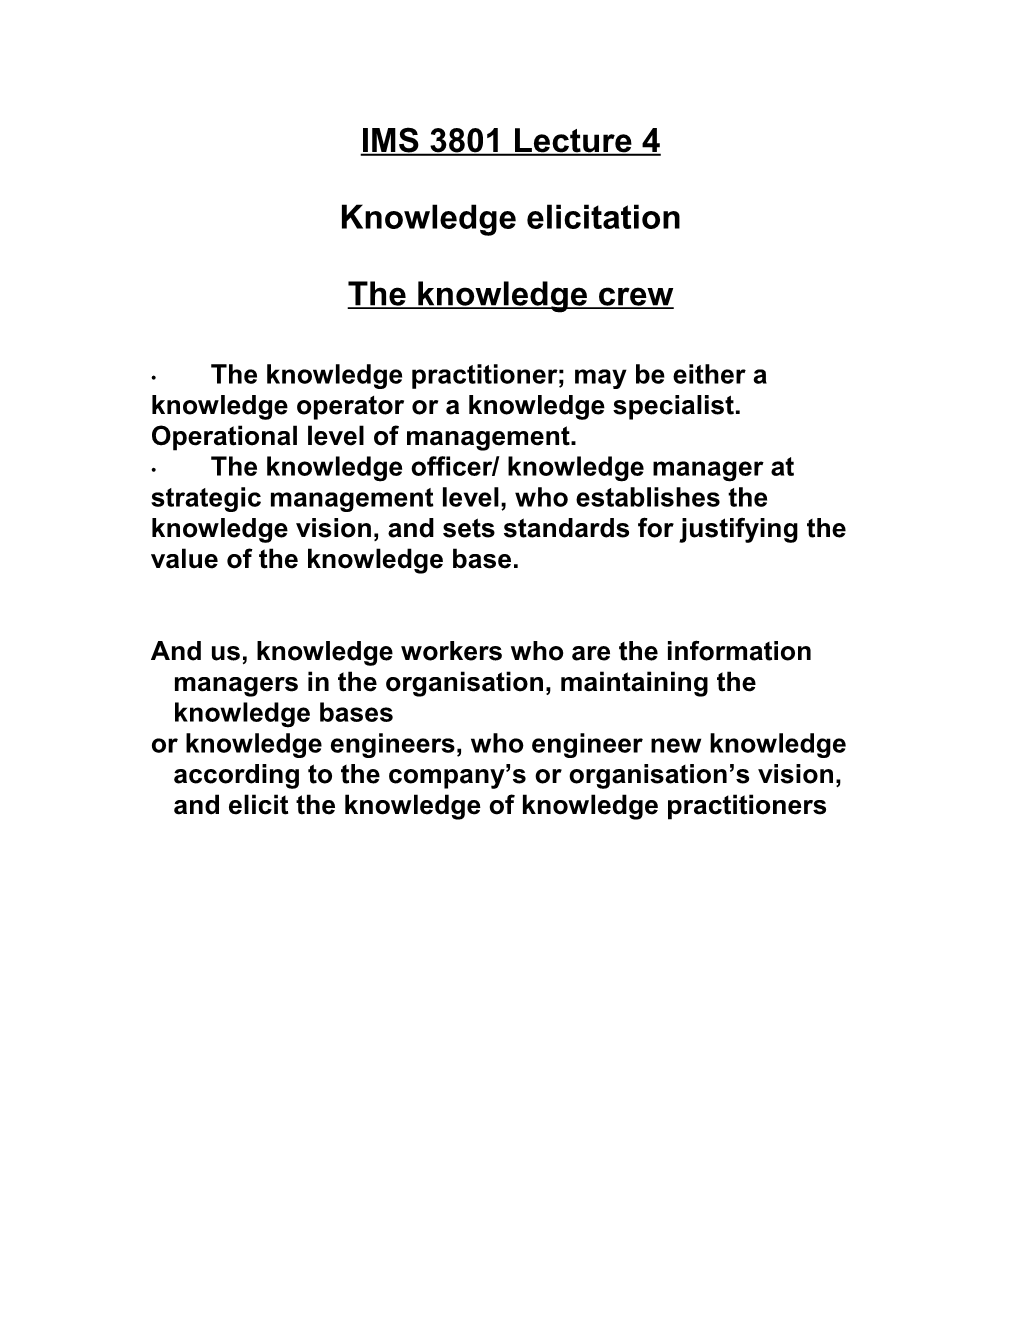 Knowledge Elicitation